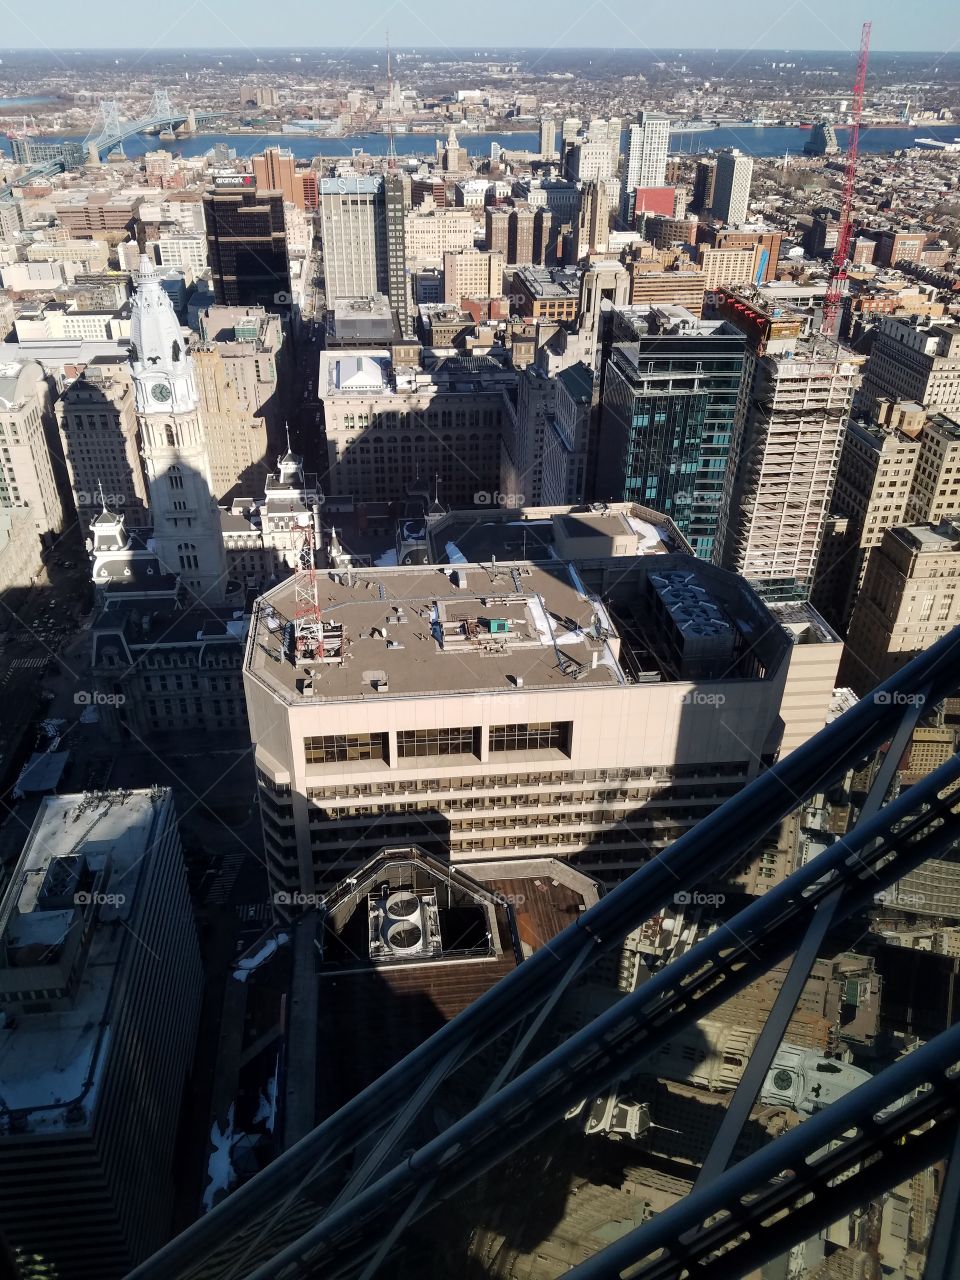 Overlooking City Hall and Center City Philadelphia